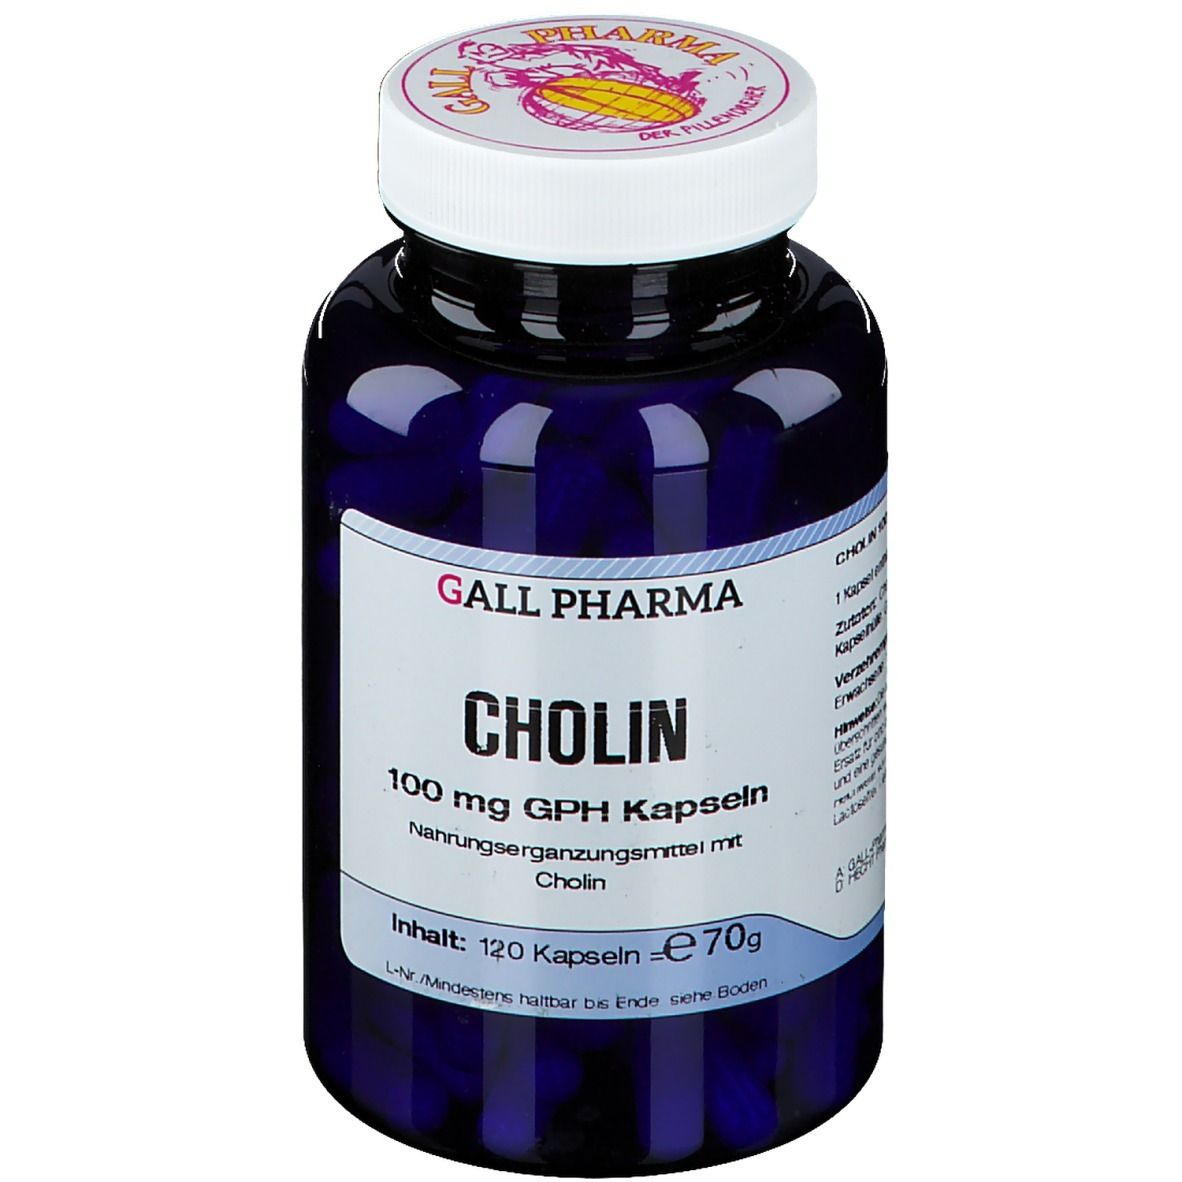 Gall Pharma Cholin 100 mg GPH Kapseln